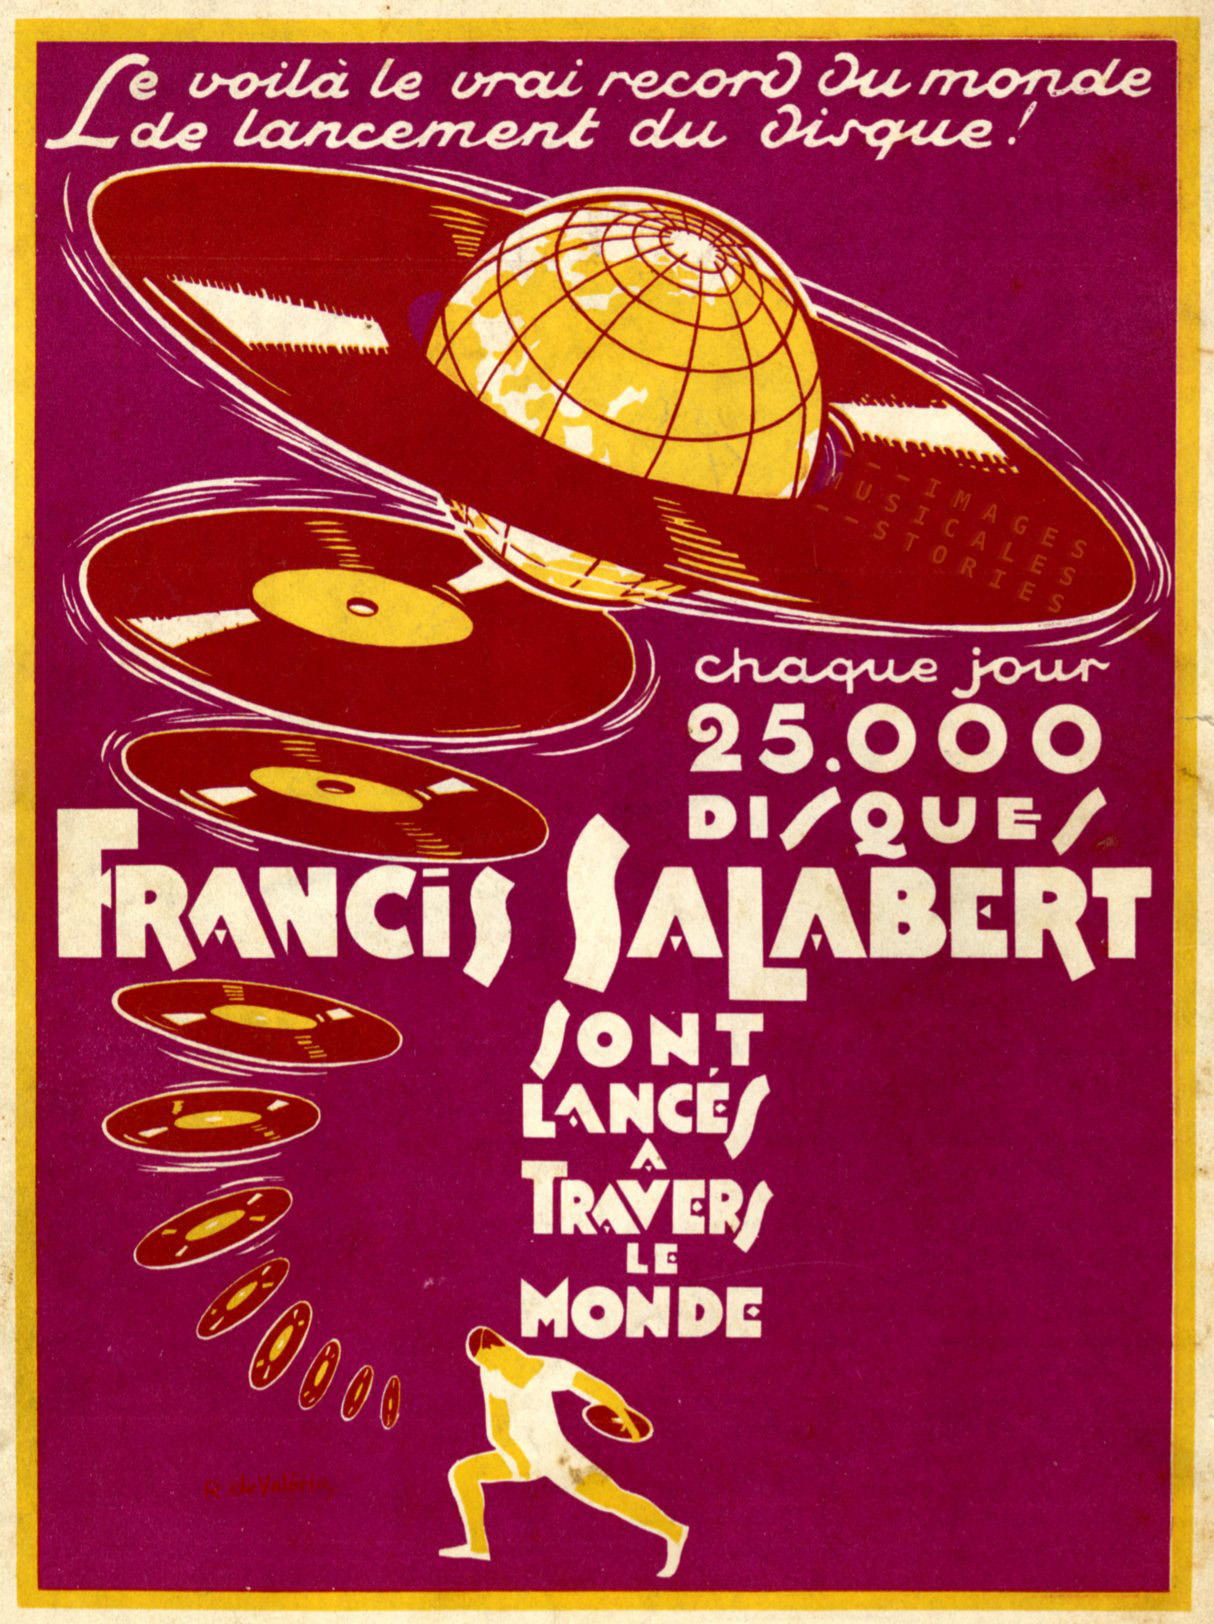 Publicity for Salabert records by Roger de Valerio